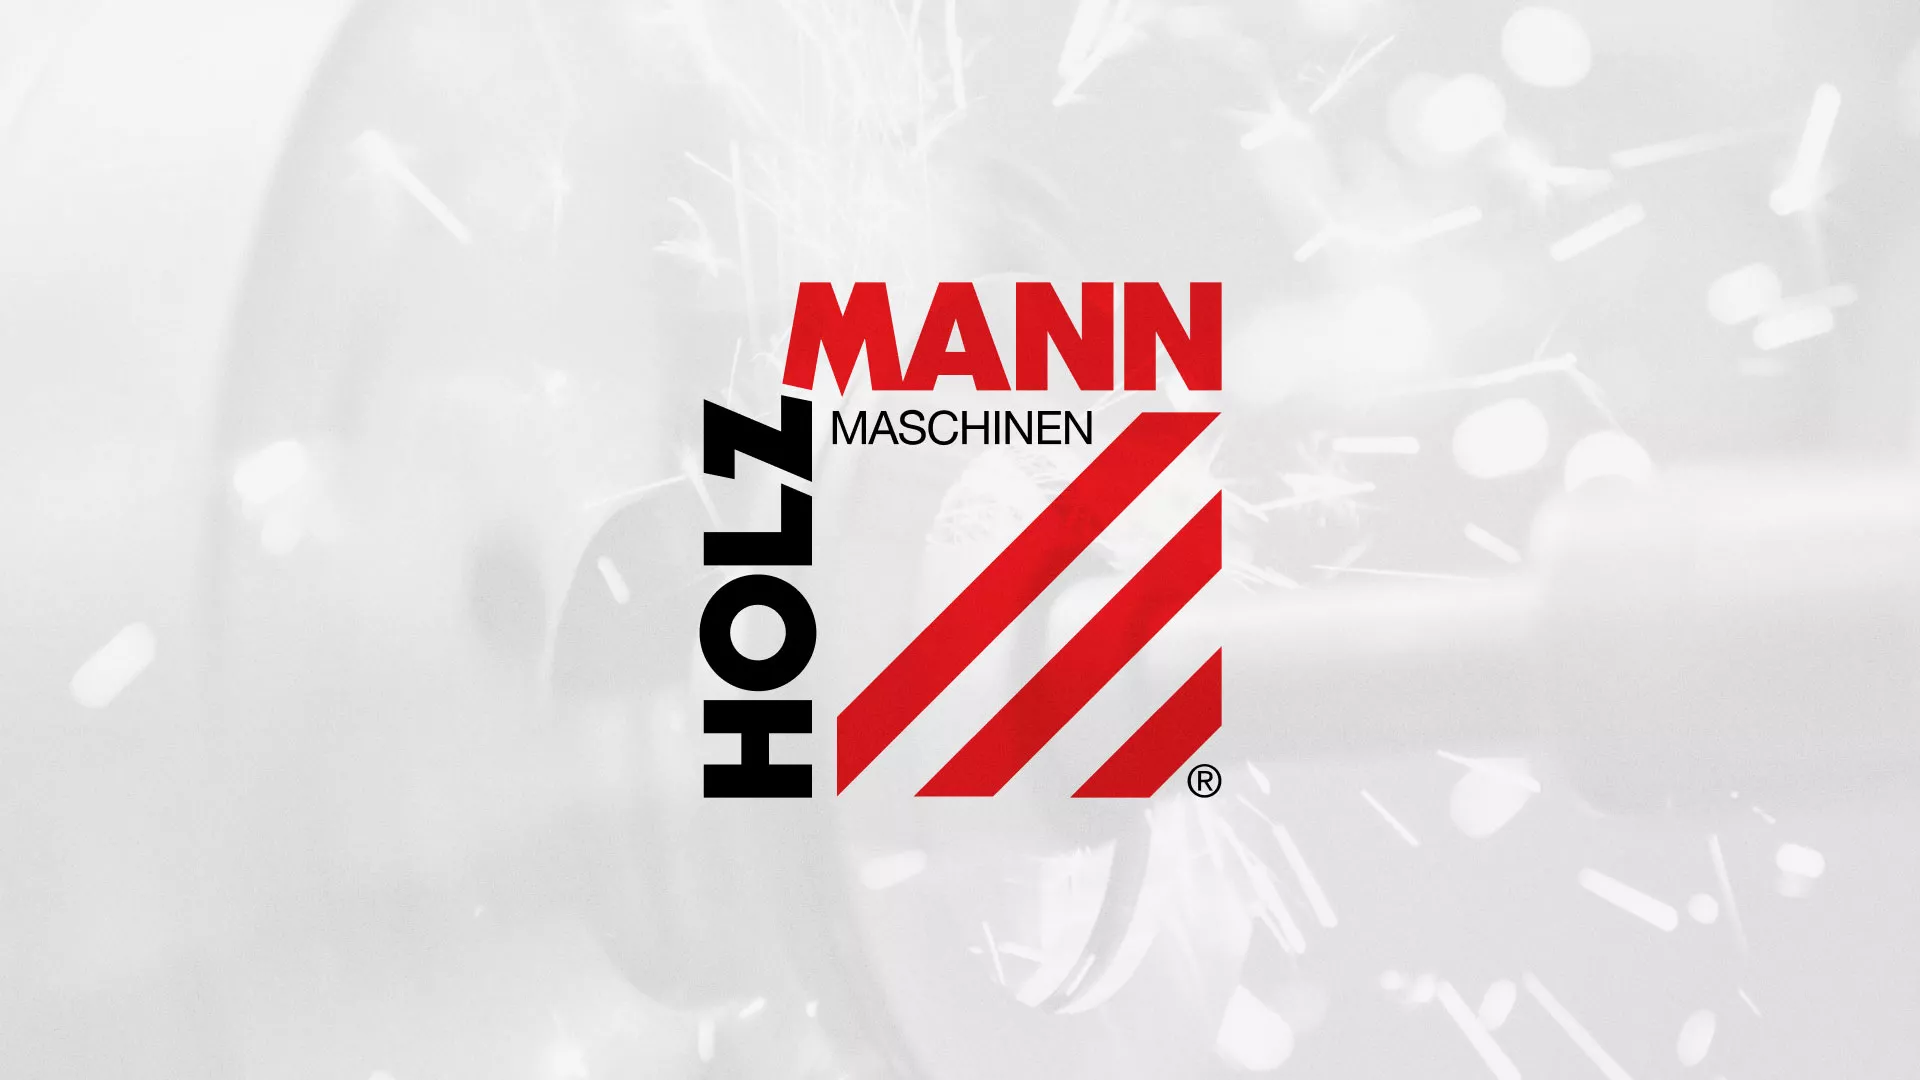 Создание сайта компании «HOLZMANN Maschinen GmbH» в Малоярославце